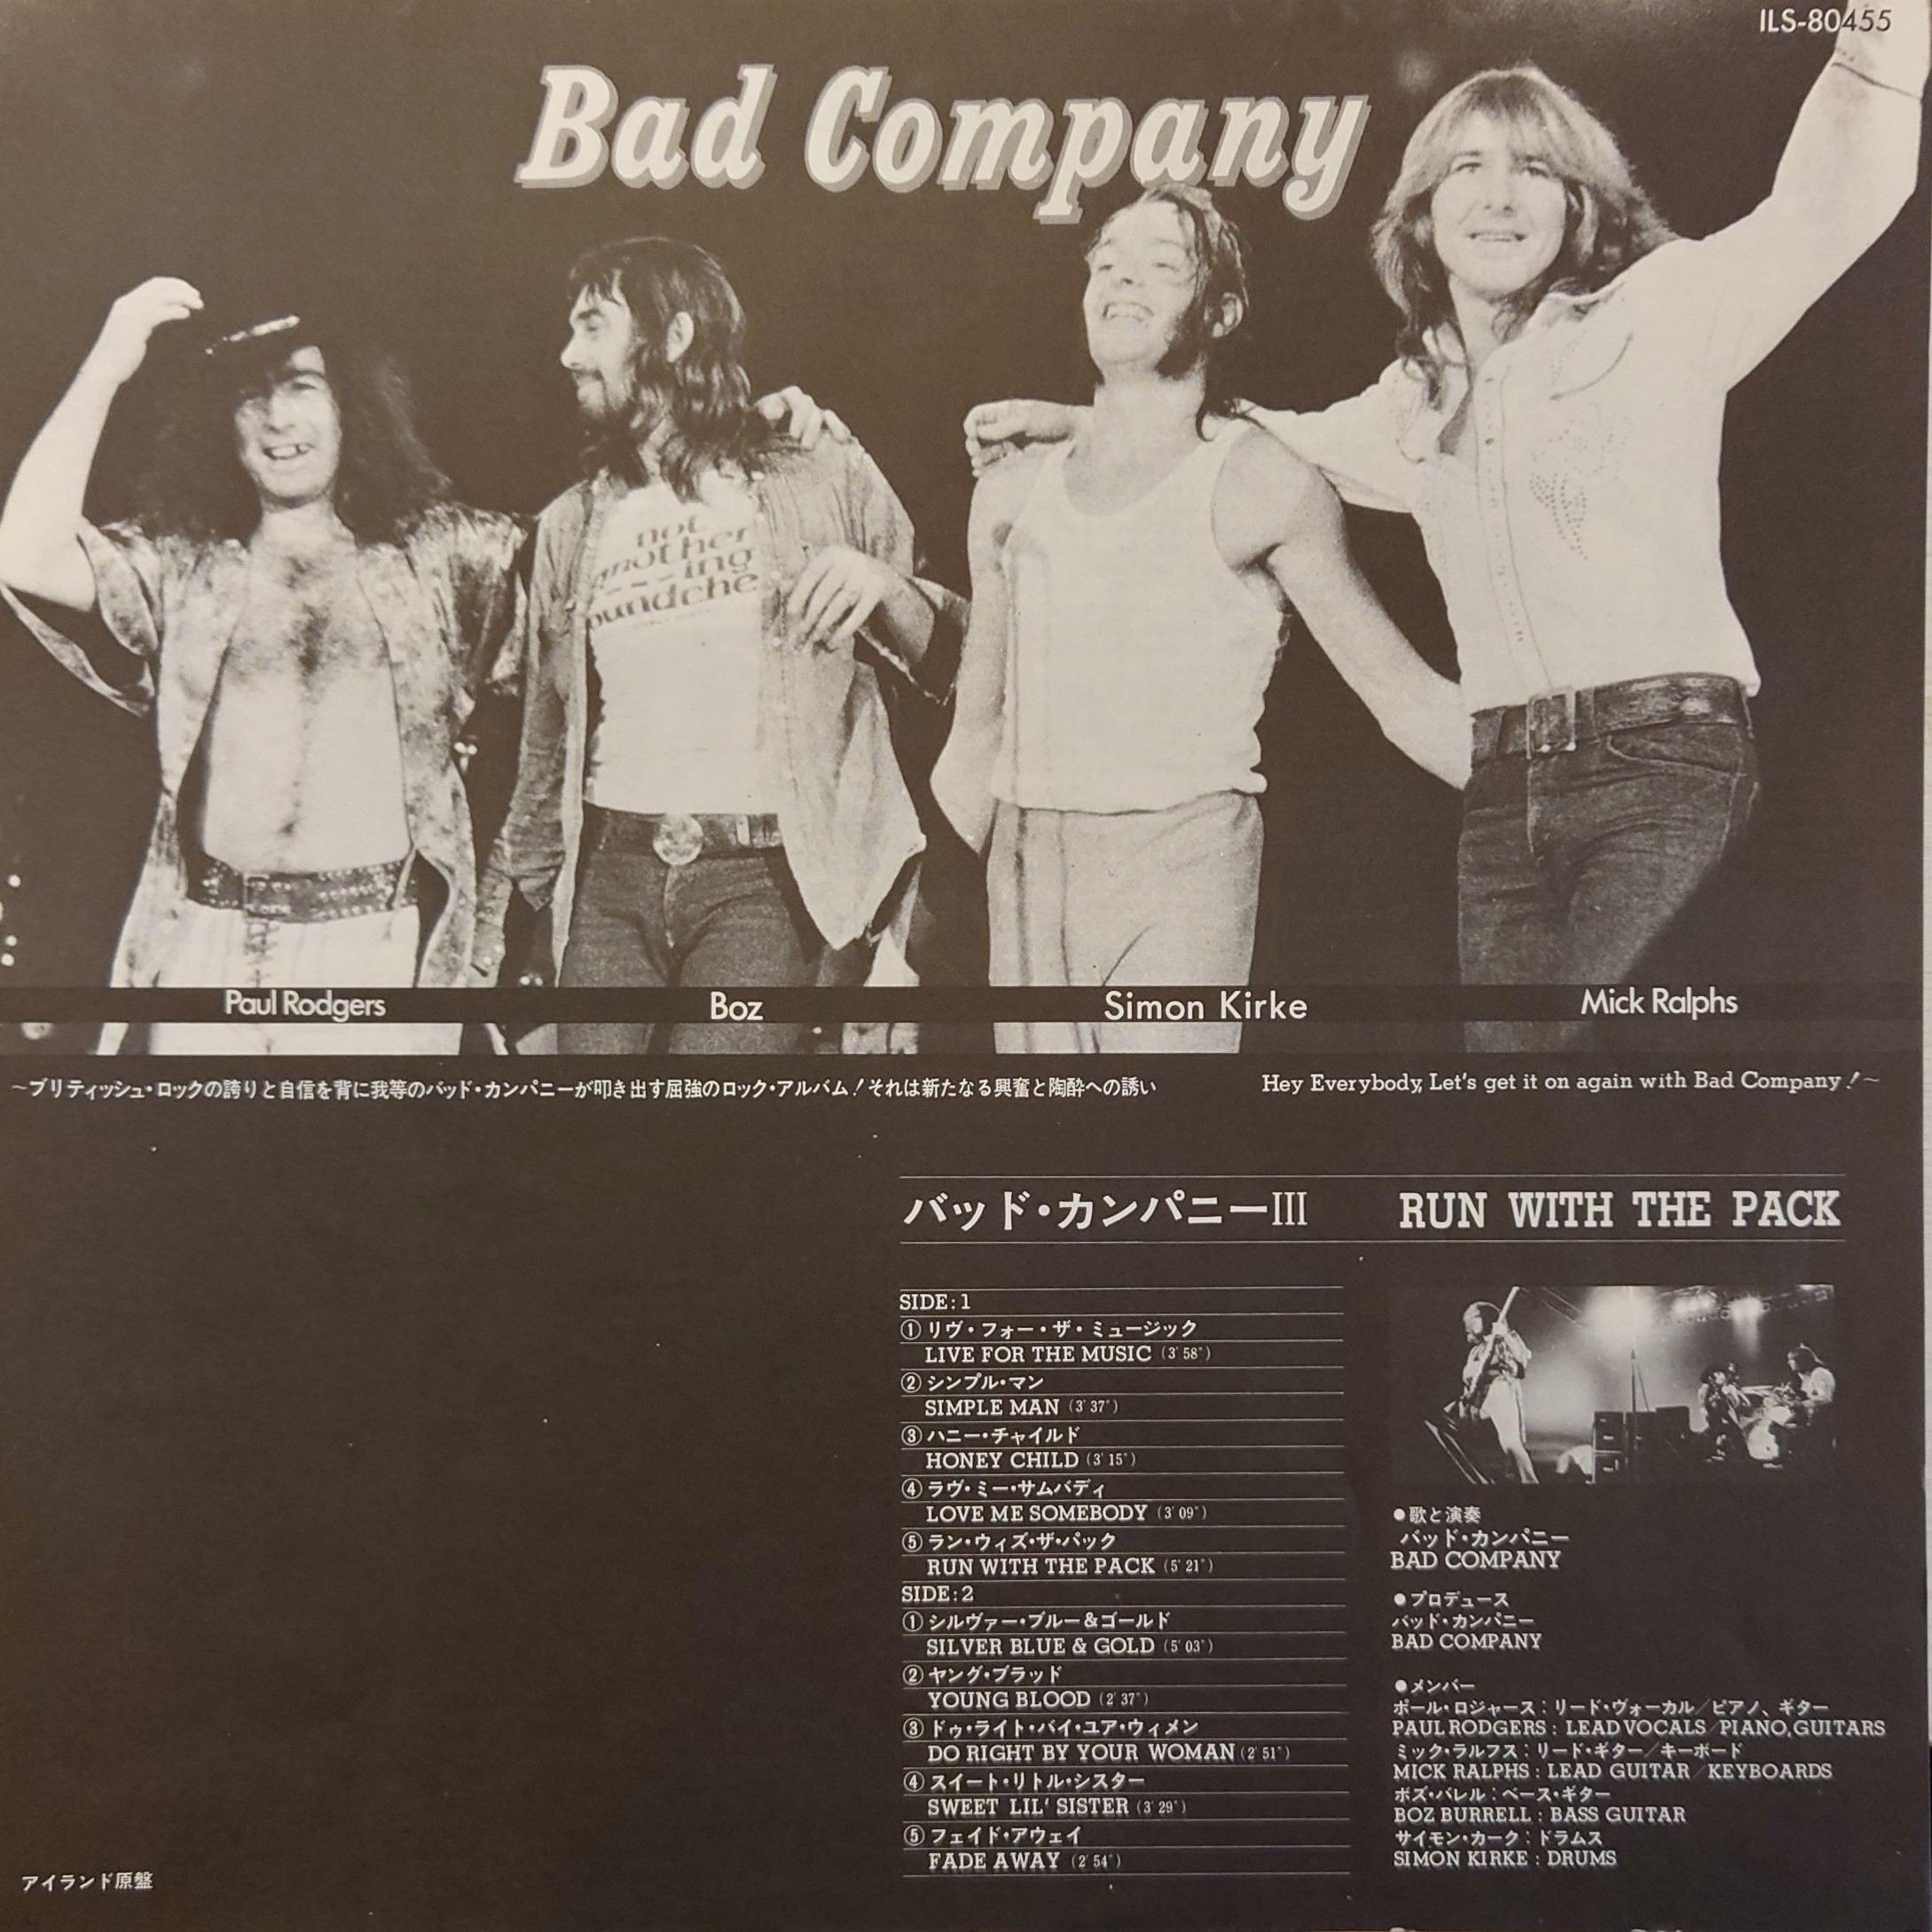 Bad Company Run With The Pack 中古レコード通販 買取のアカル レコーズ